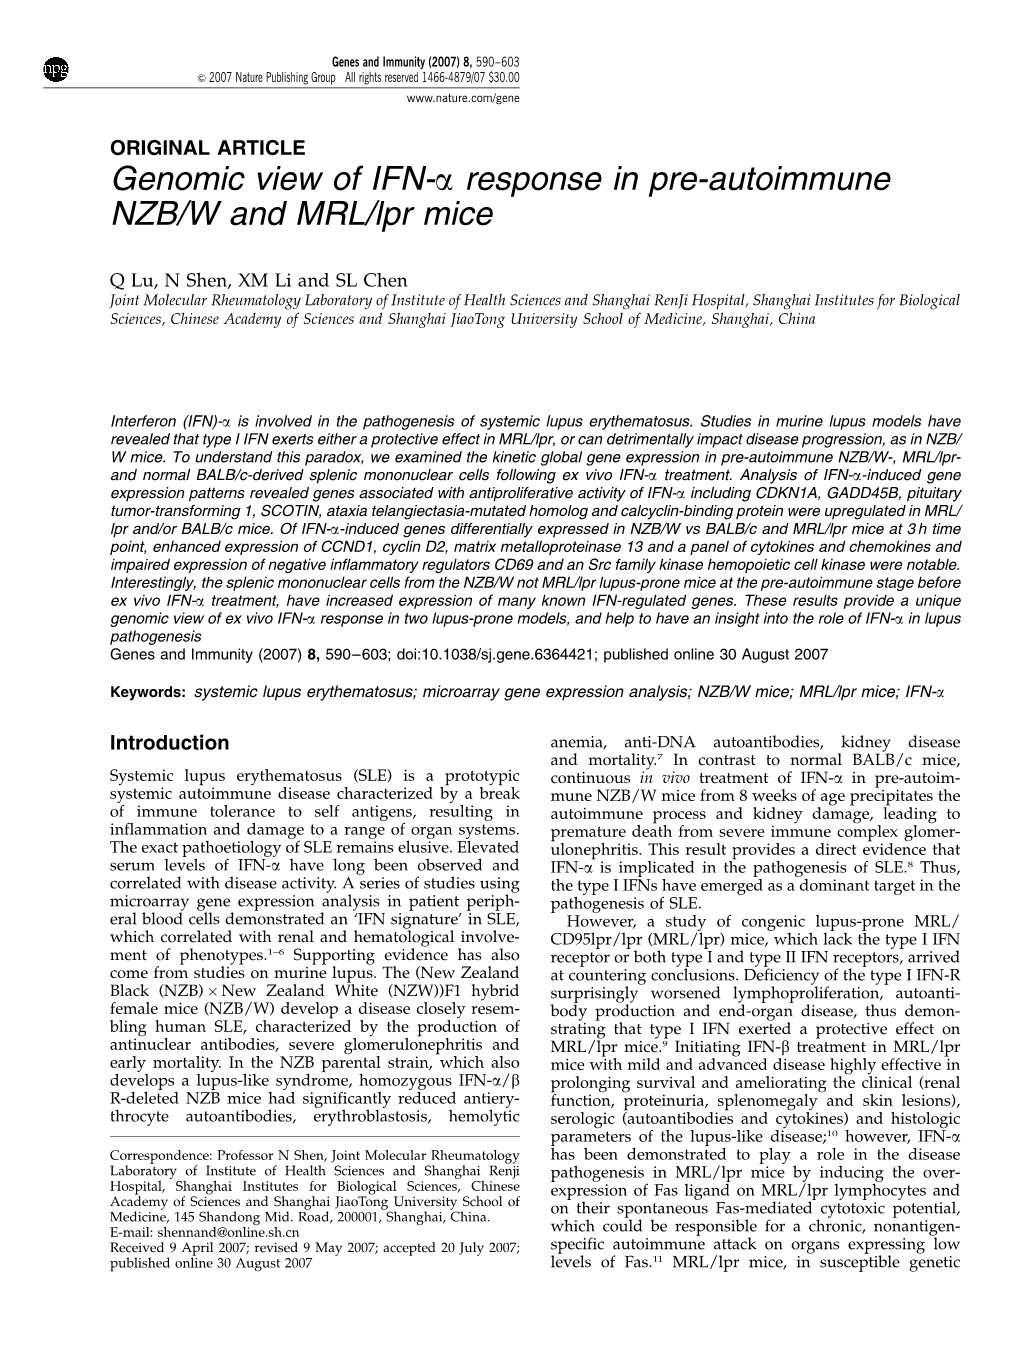 Genomic View of IFN-Α Response in Pre-Autoimmune NZB/W and MRL